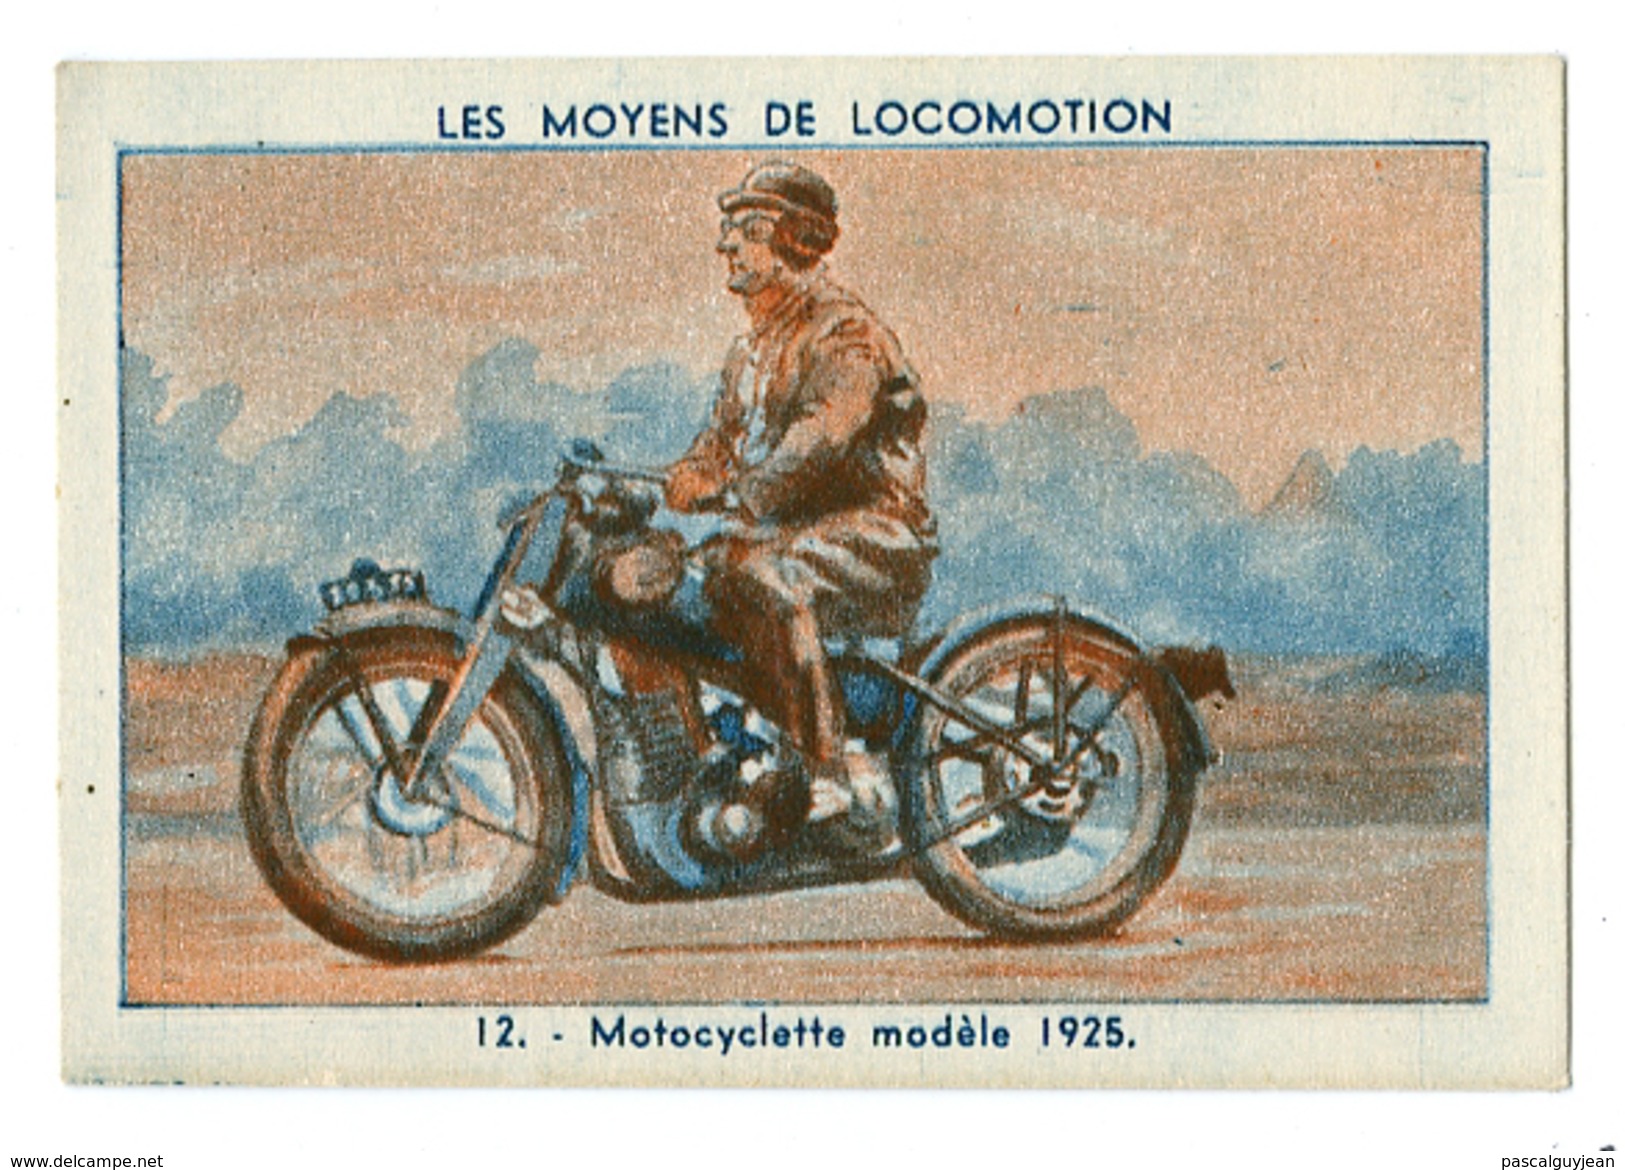 CHROMO LES MOYENS DE LOCOMOTION - MOTOCYCLETTE MODELE 1925 - Automobili